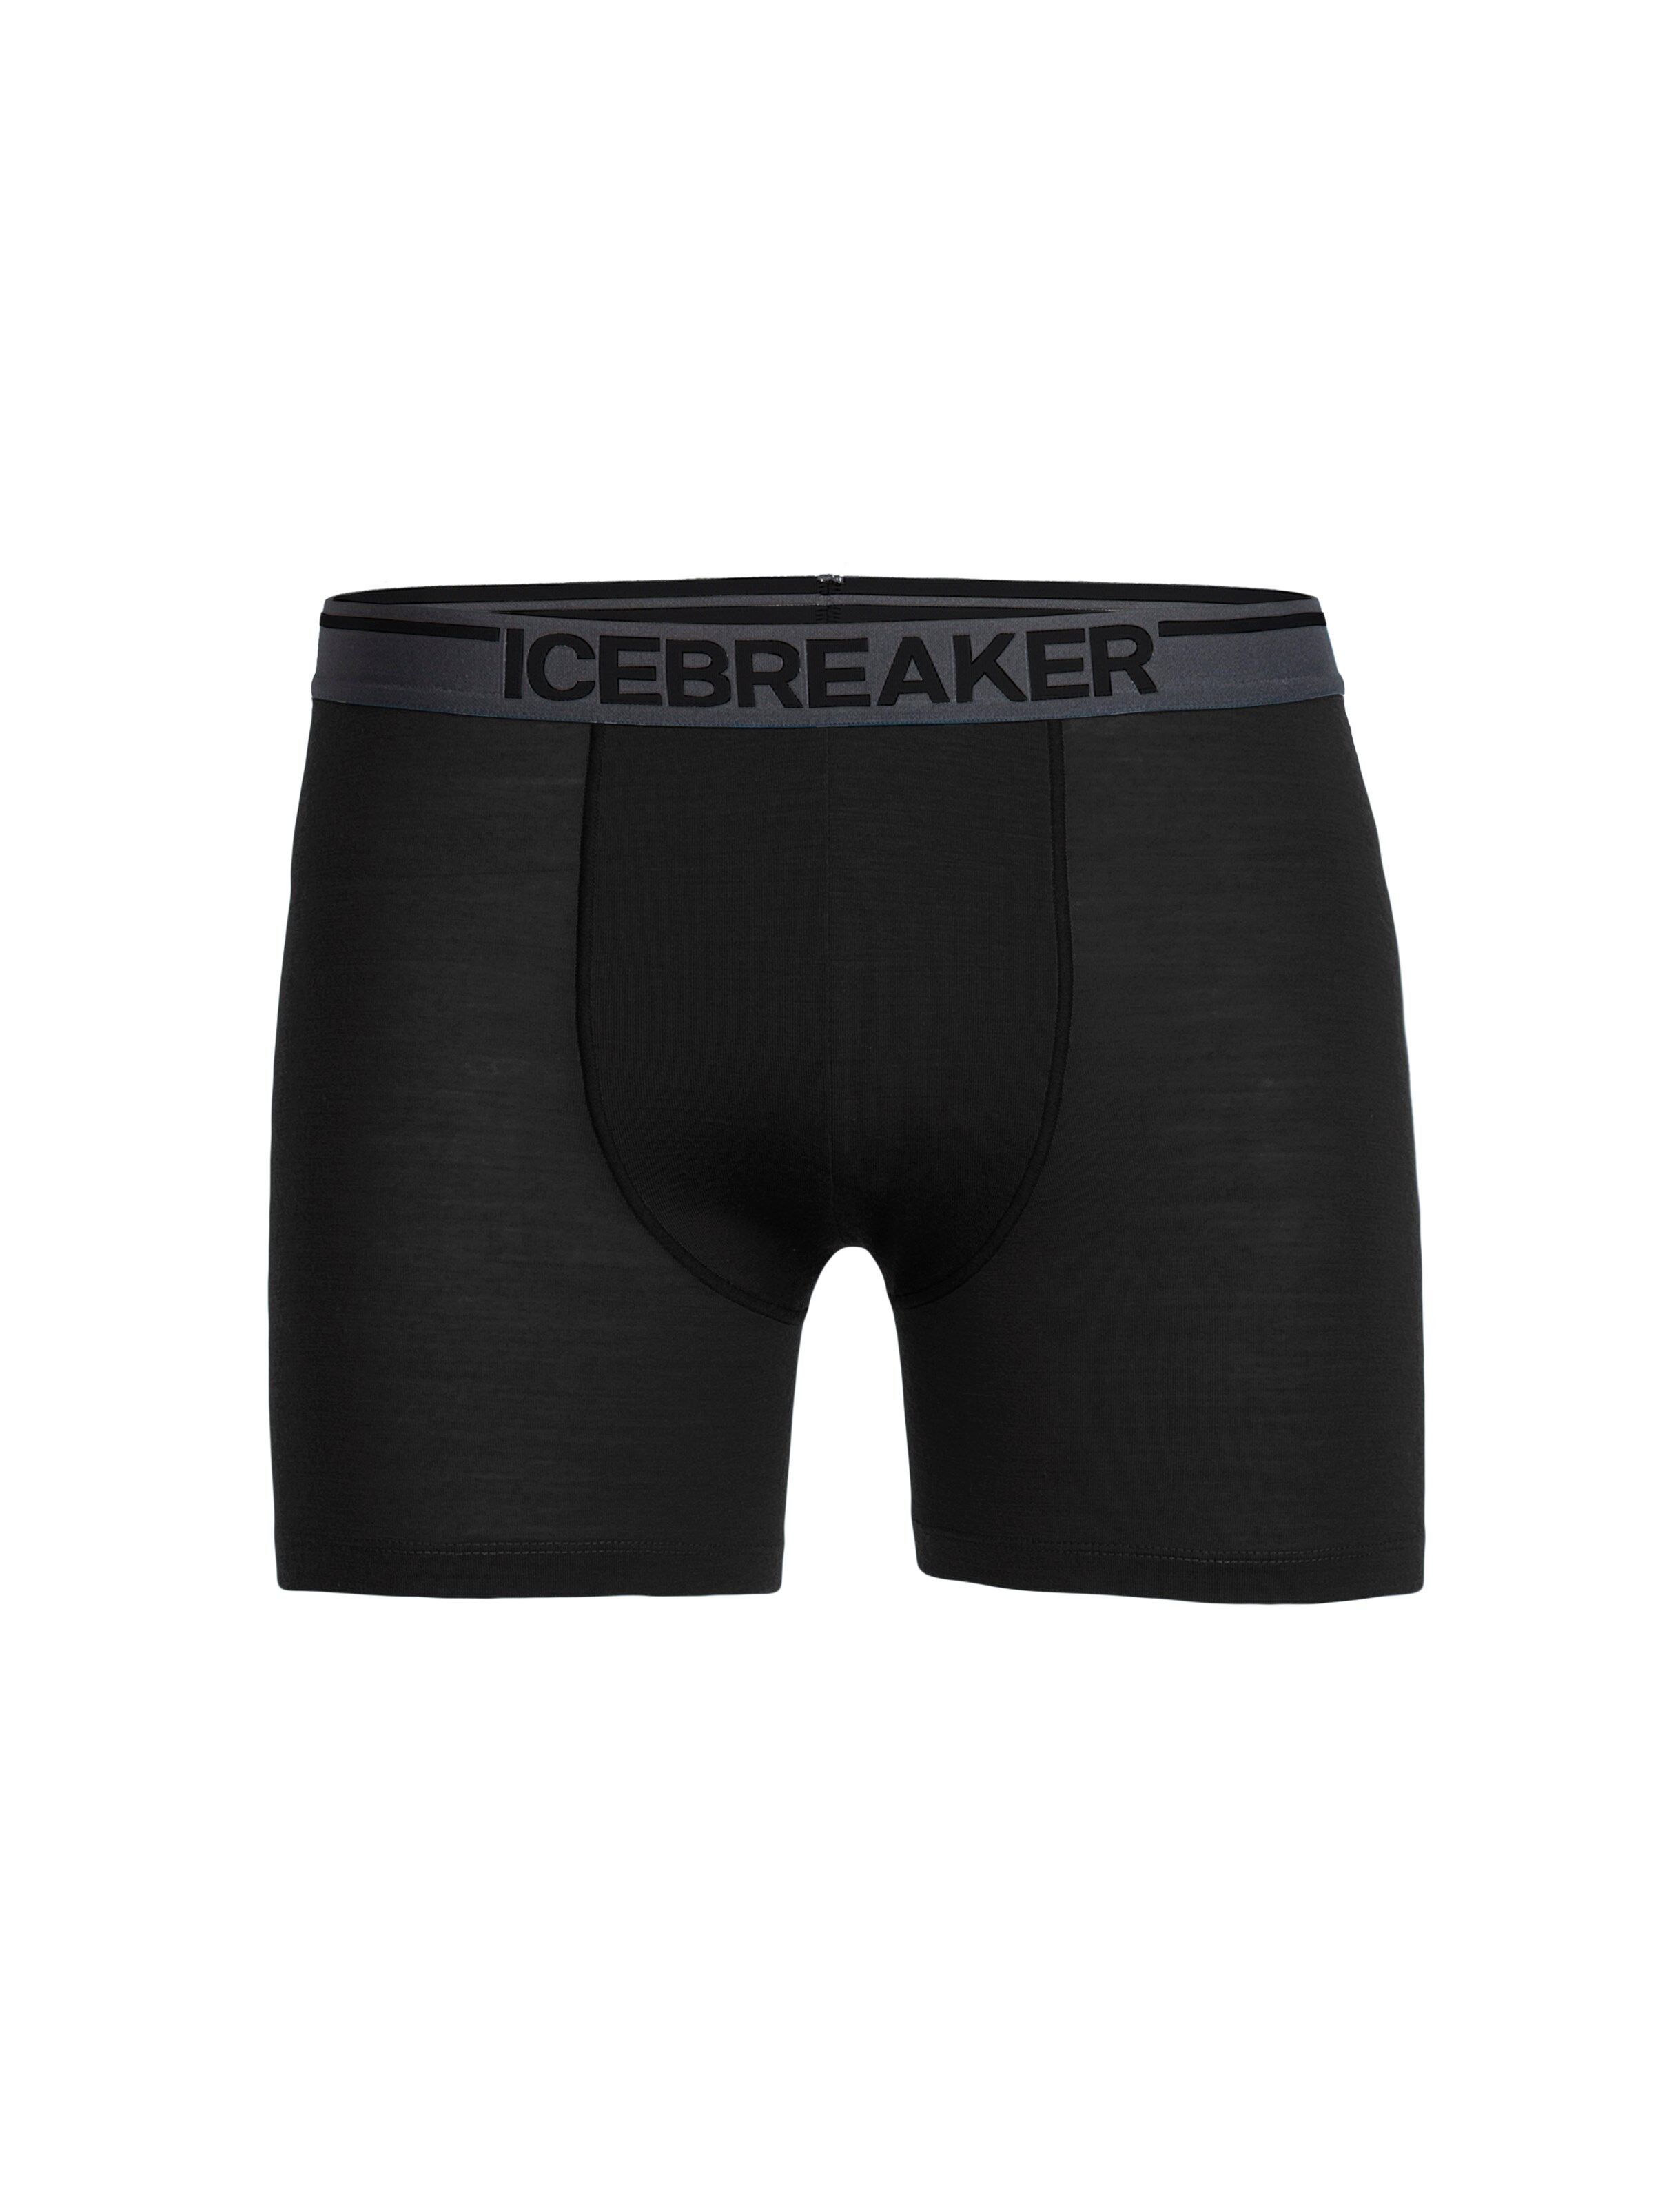 Icebreaker Anatomica Boxers, boxershorts herre Black/Monsoon 103029007 XL 2020